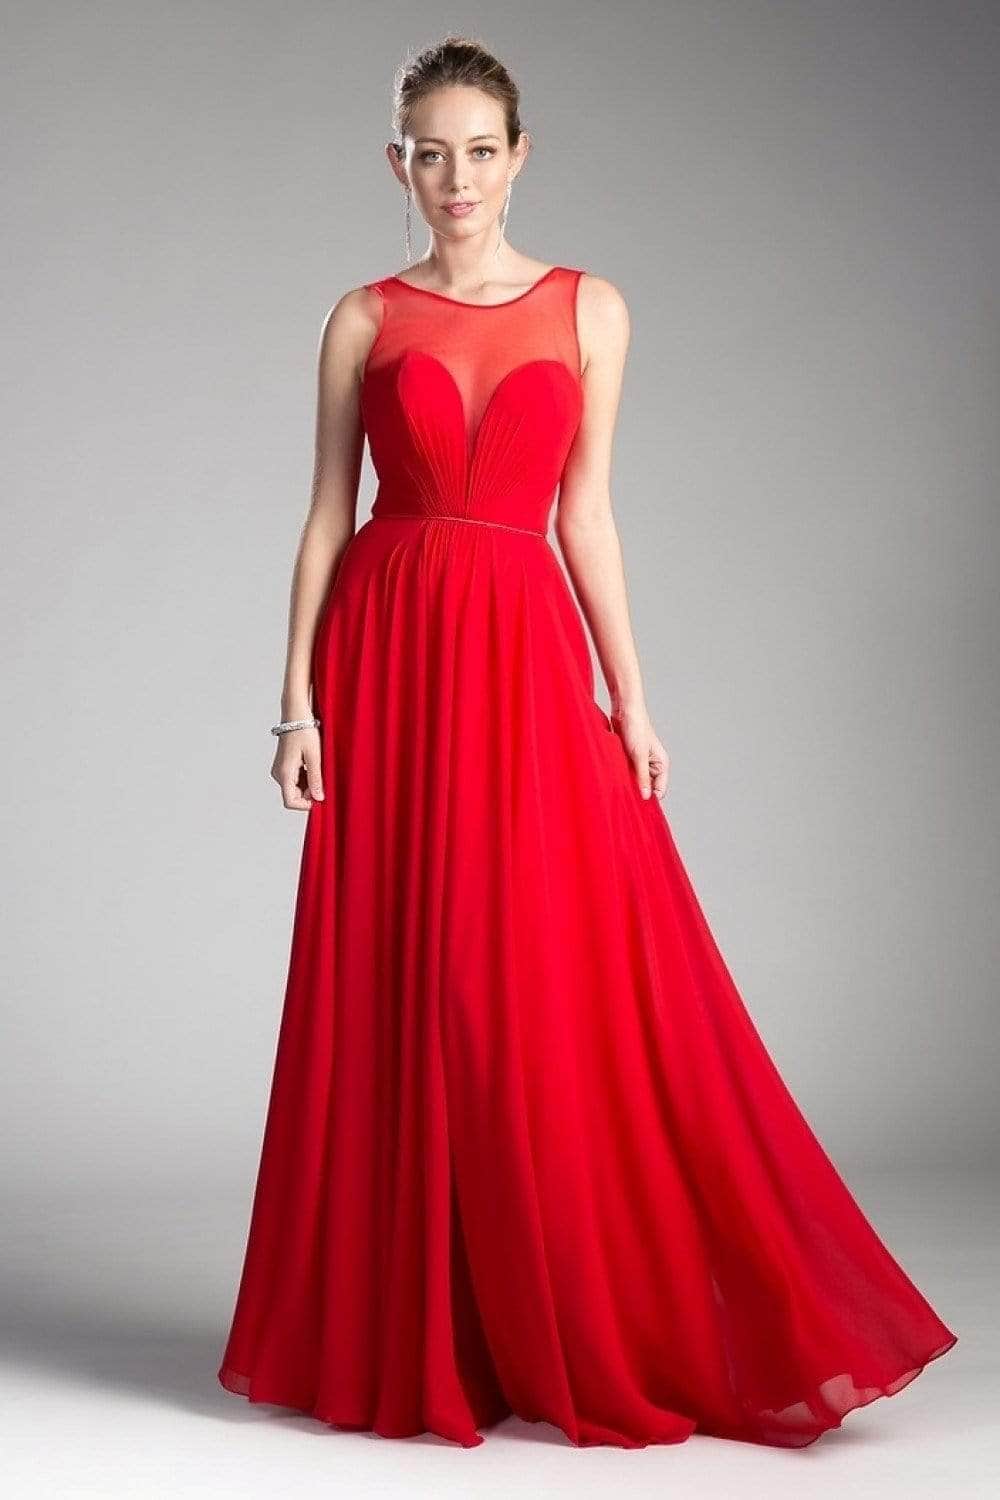 Ladivine CJ251 Evening Dresses 2 / Red